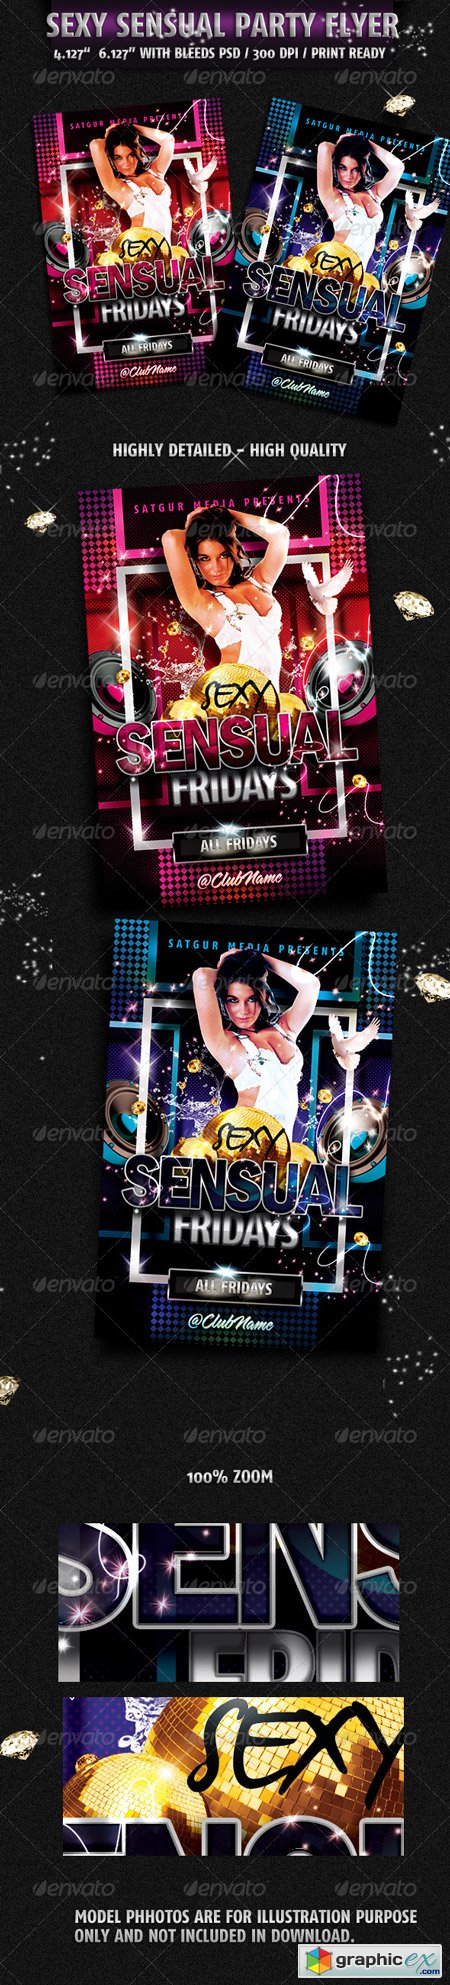 Sensual Music Dance DJ Night Party Flyer 2138436